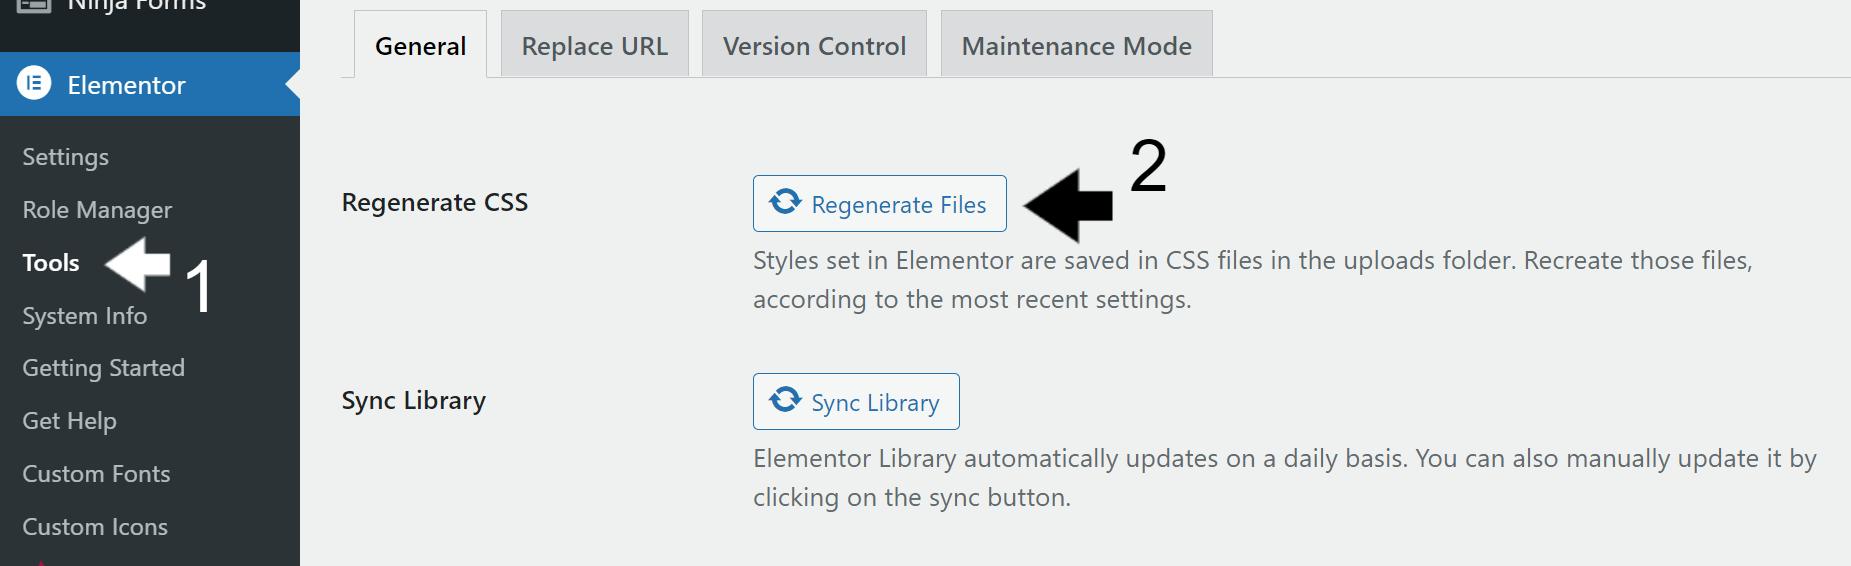 regenerate files through elementor plugin settings to fix elementor changes not showing on wordpress website